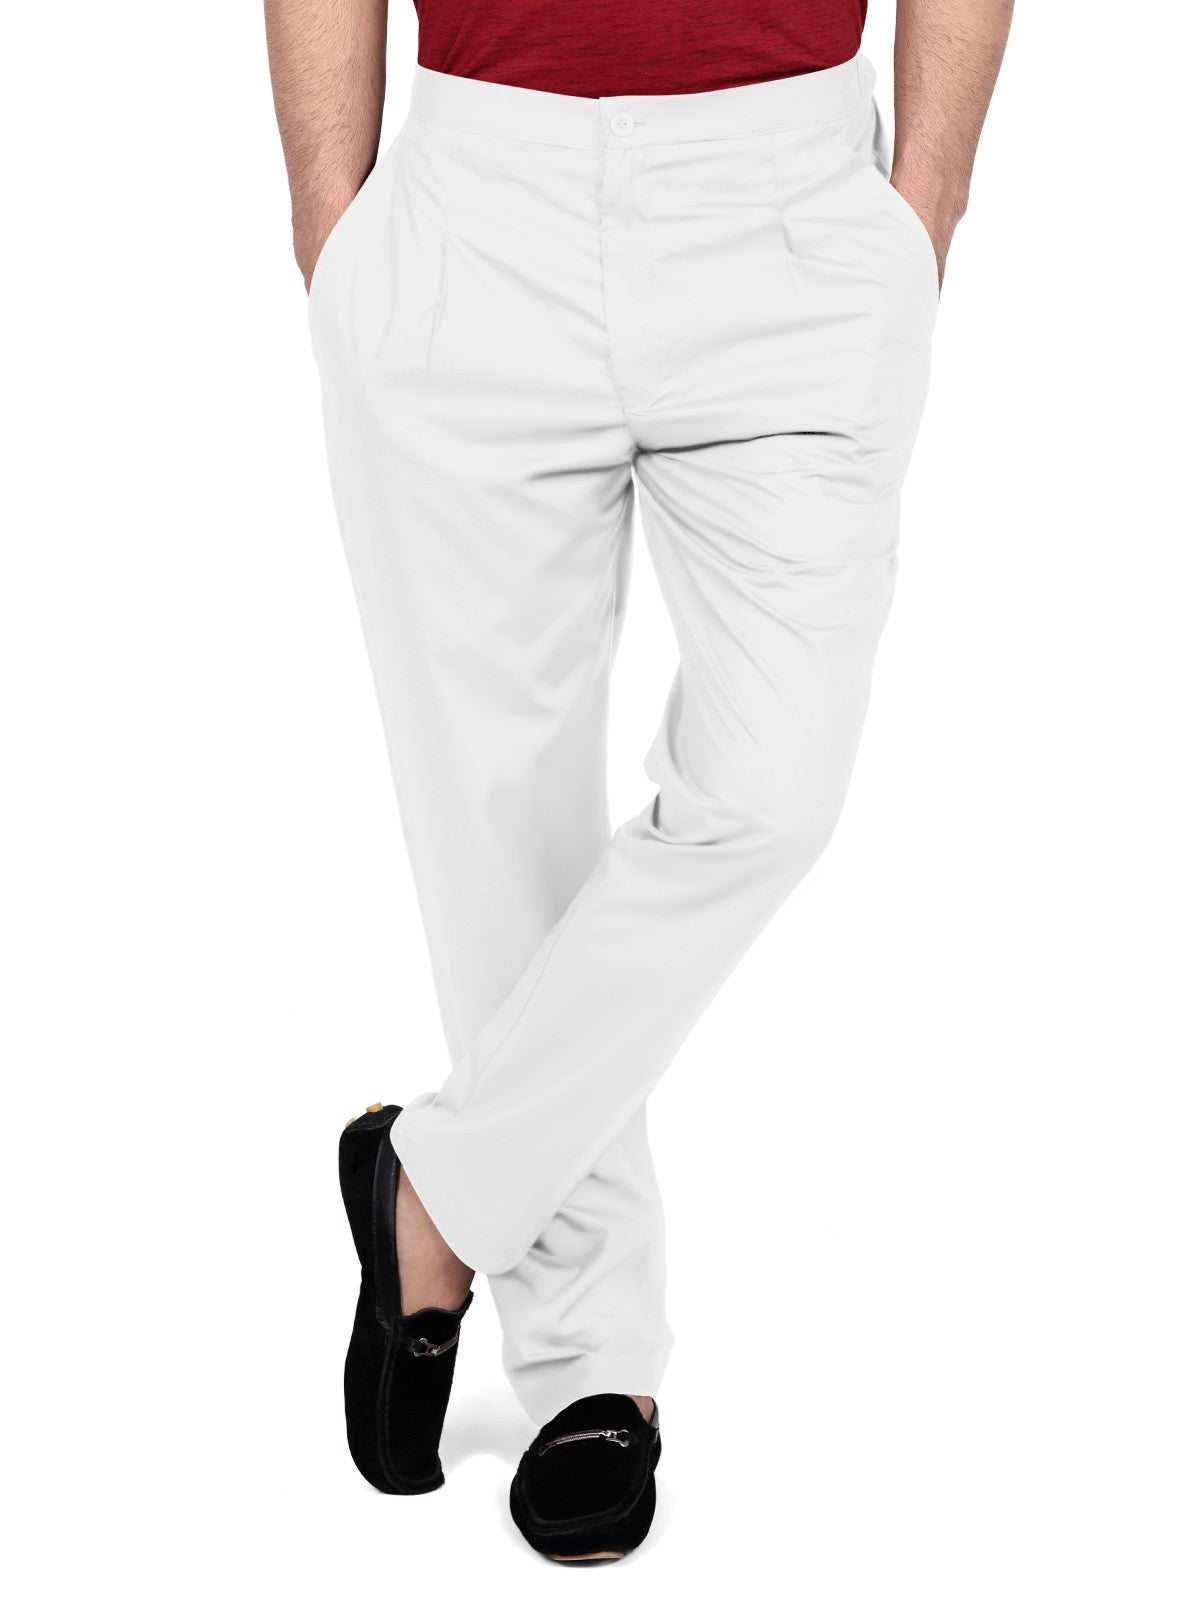 Men's White Pant Style Pajama - EMBP20-9915